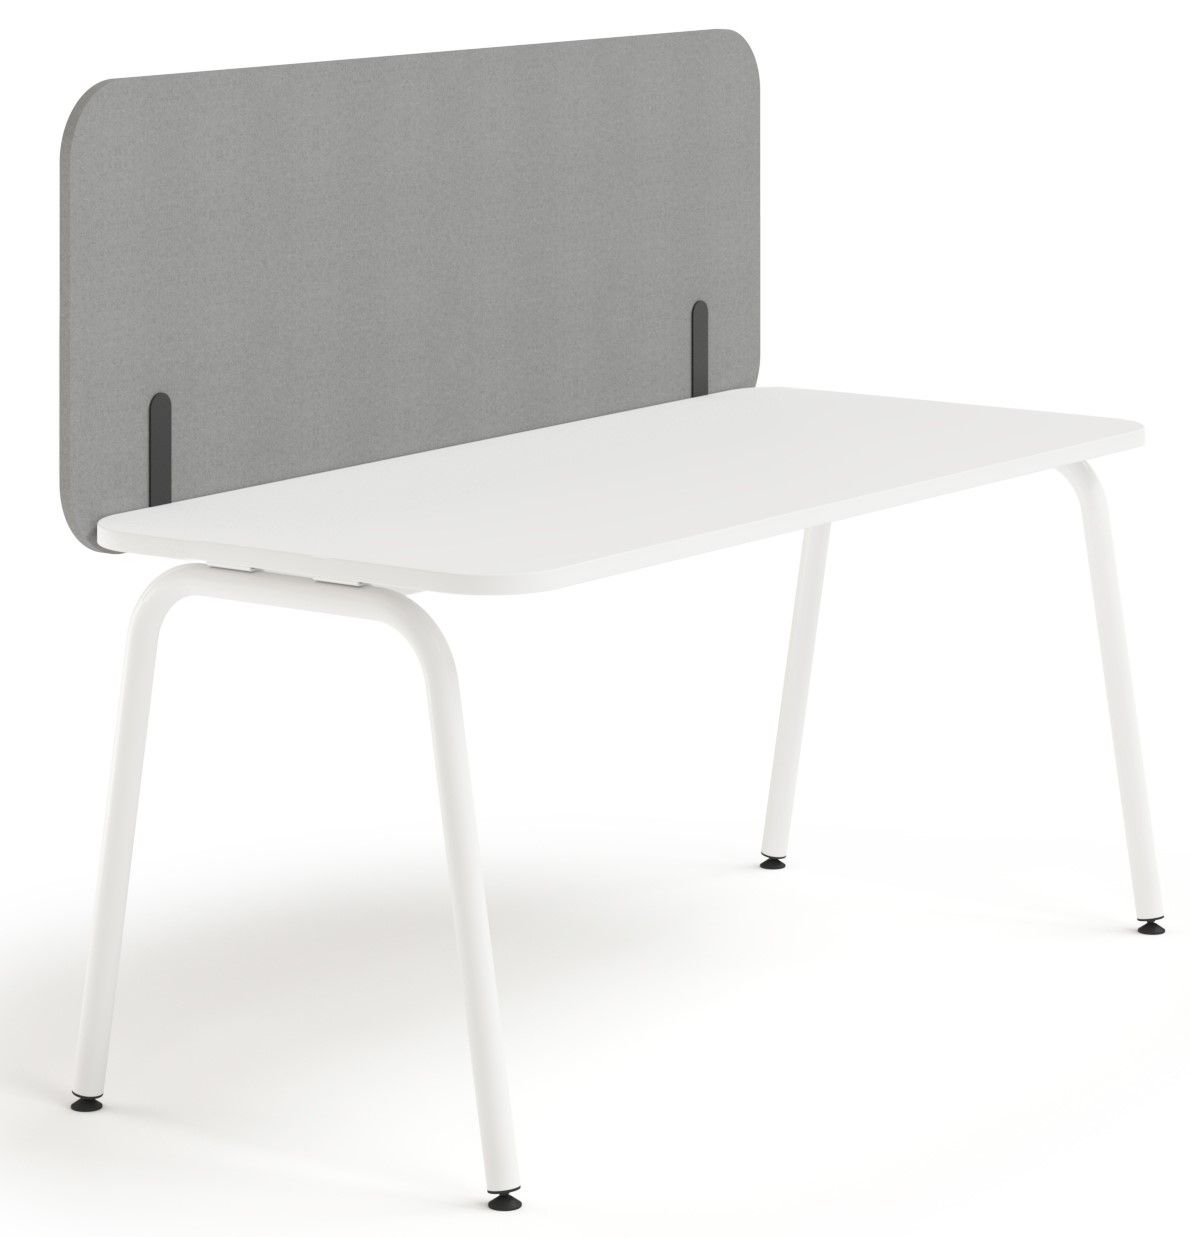 NARBUTAS - Čelný akustický panel ROUND PET pre stoly s posuvnou doskou - výška 60 cm